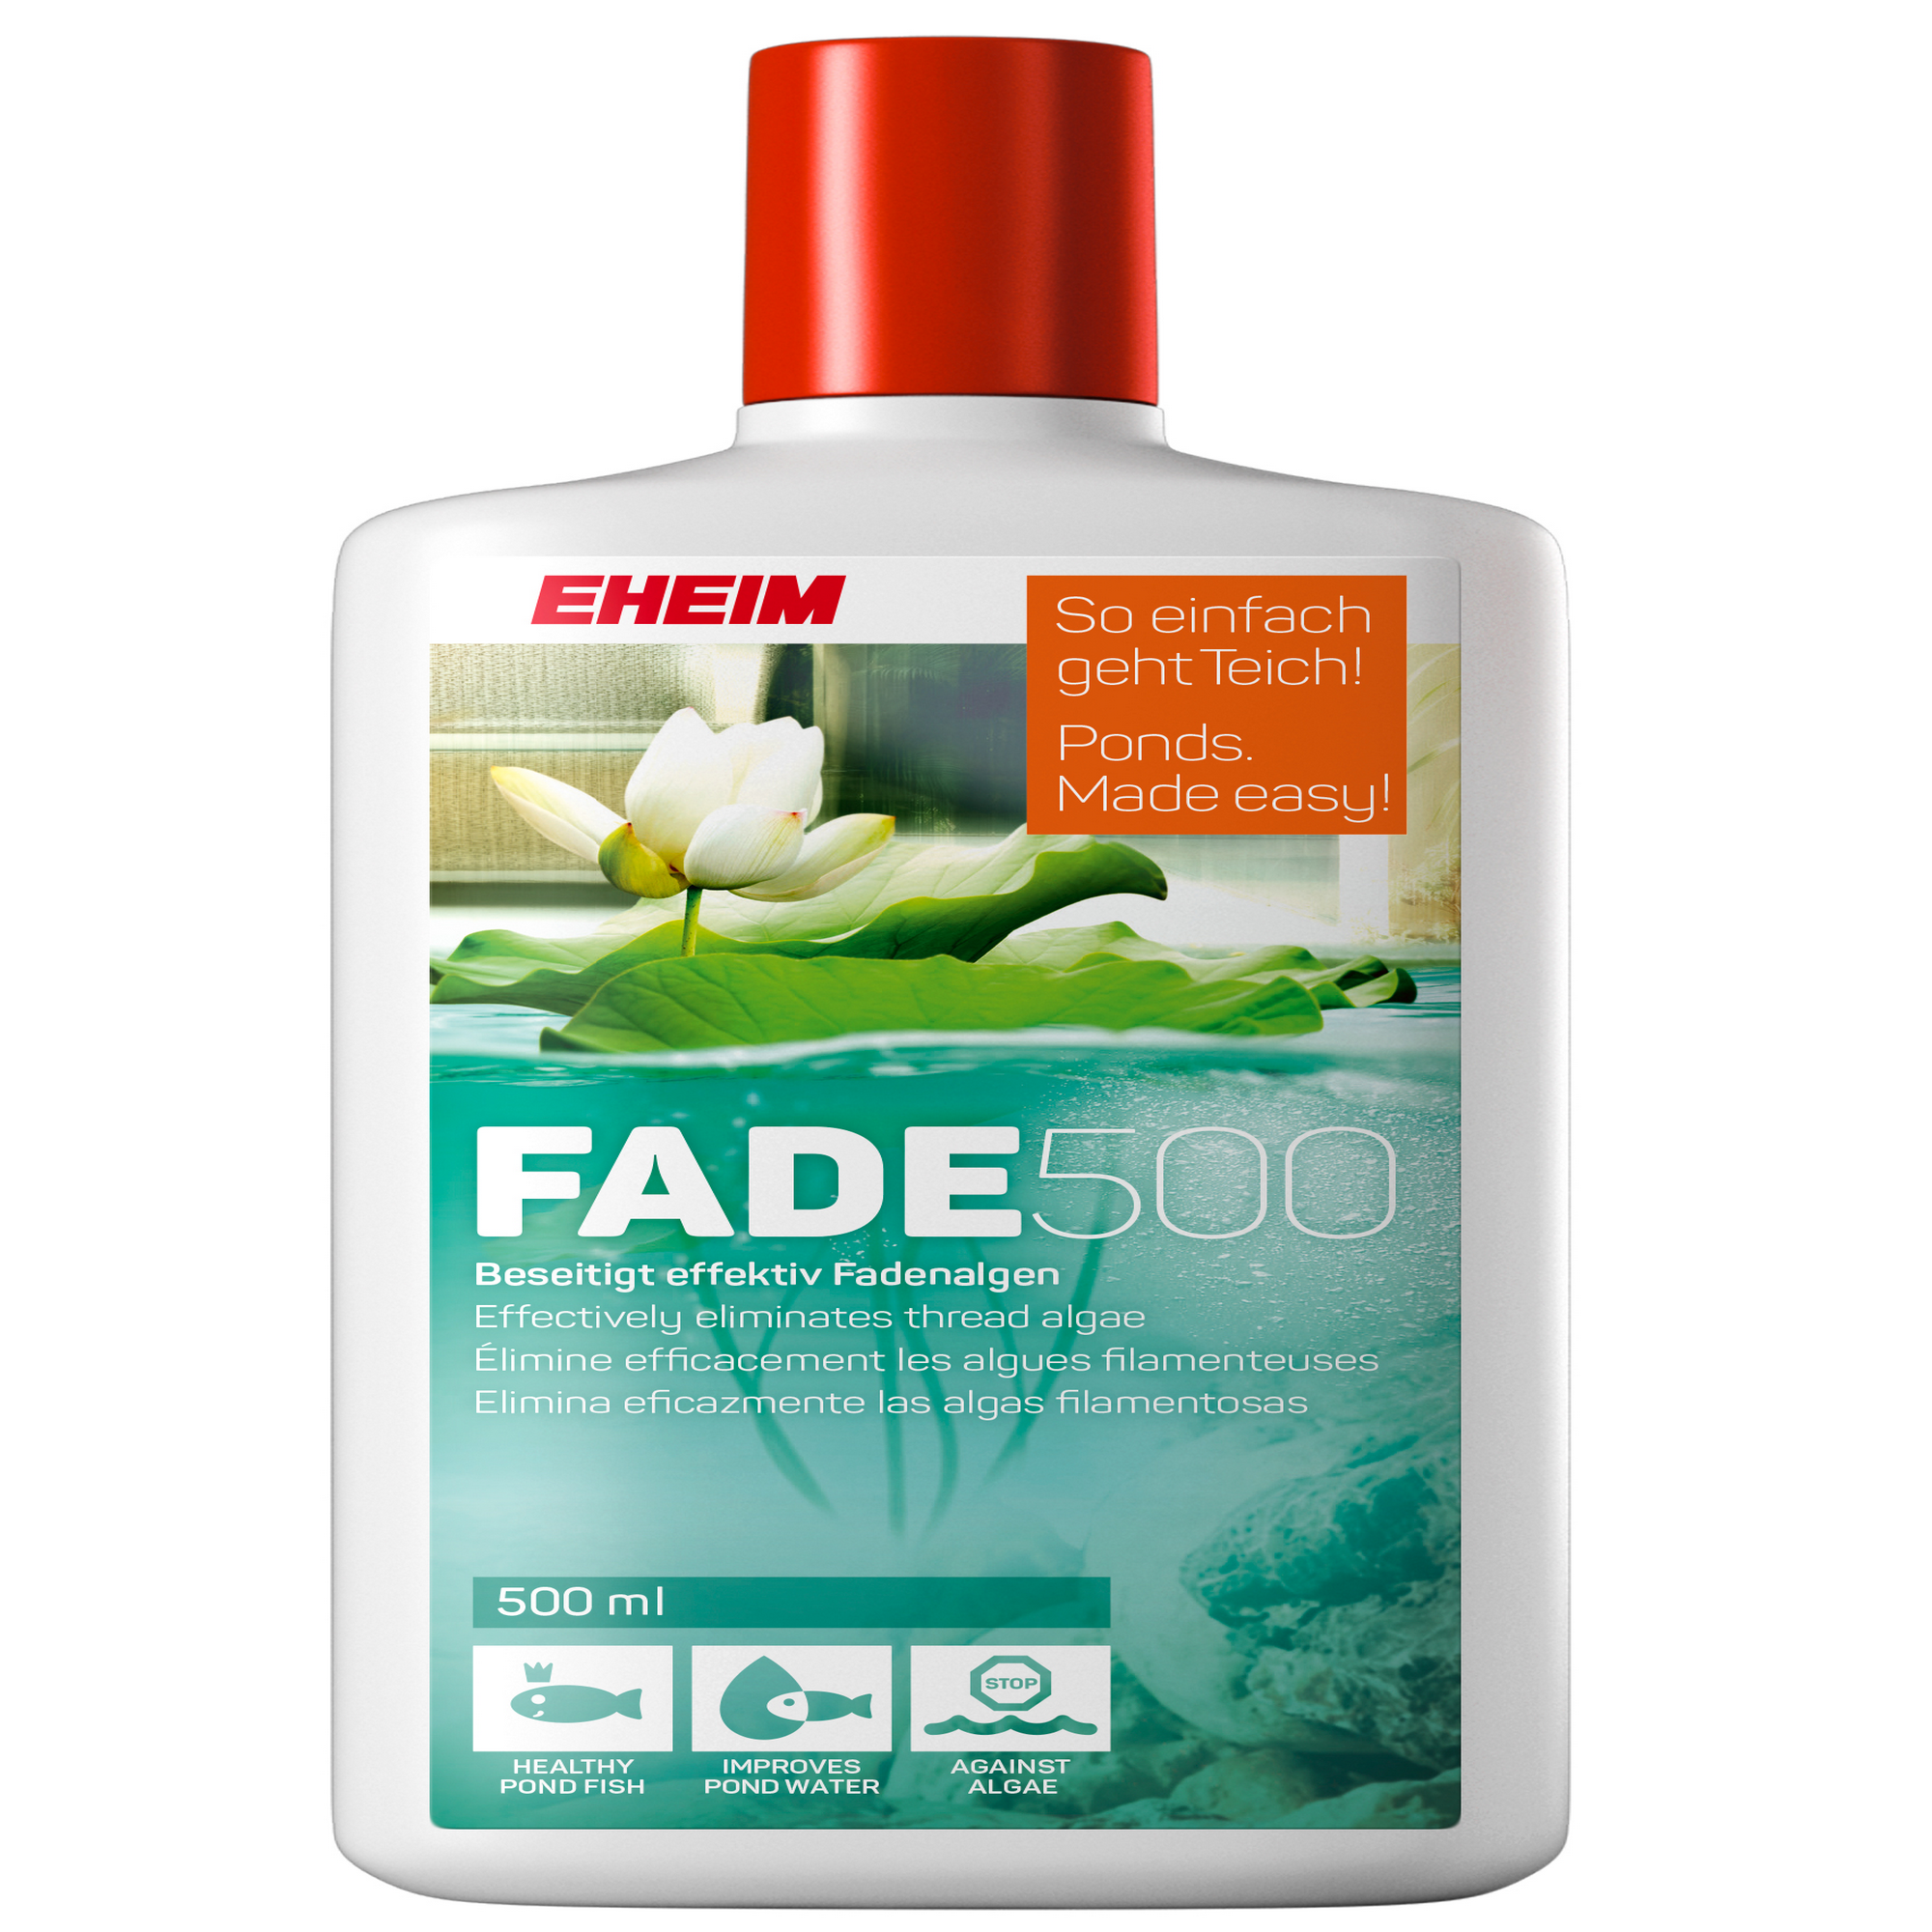 Fadenalgenentferner FADE 500 500 ml + product picture